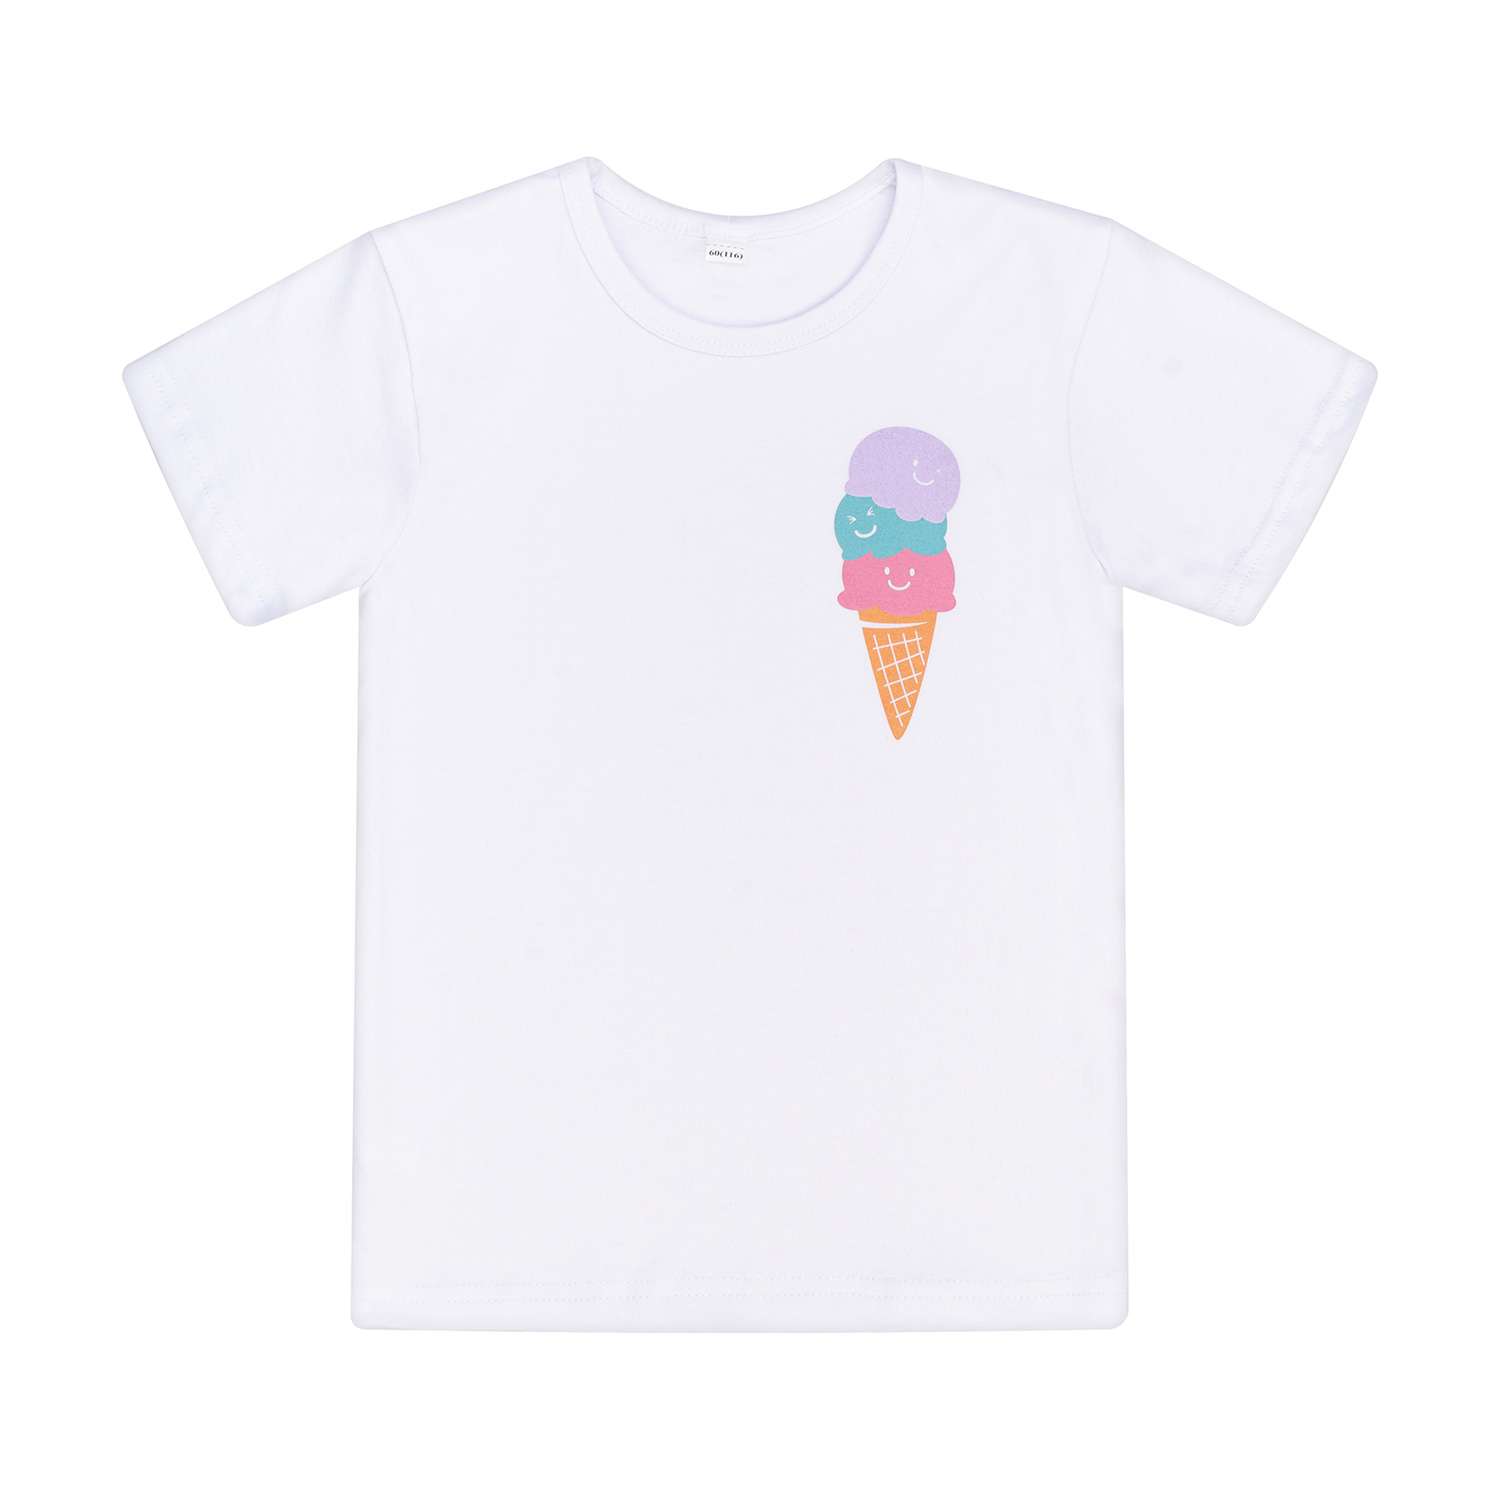 Пижама Утенок 827п/1 белый разводы мороженое - фото 14